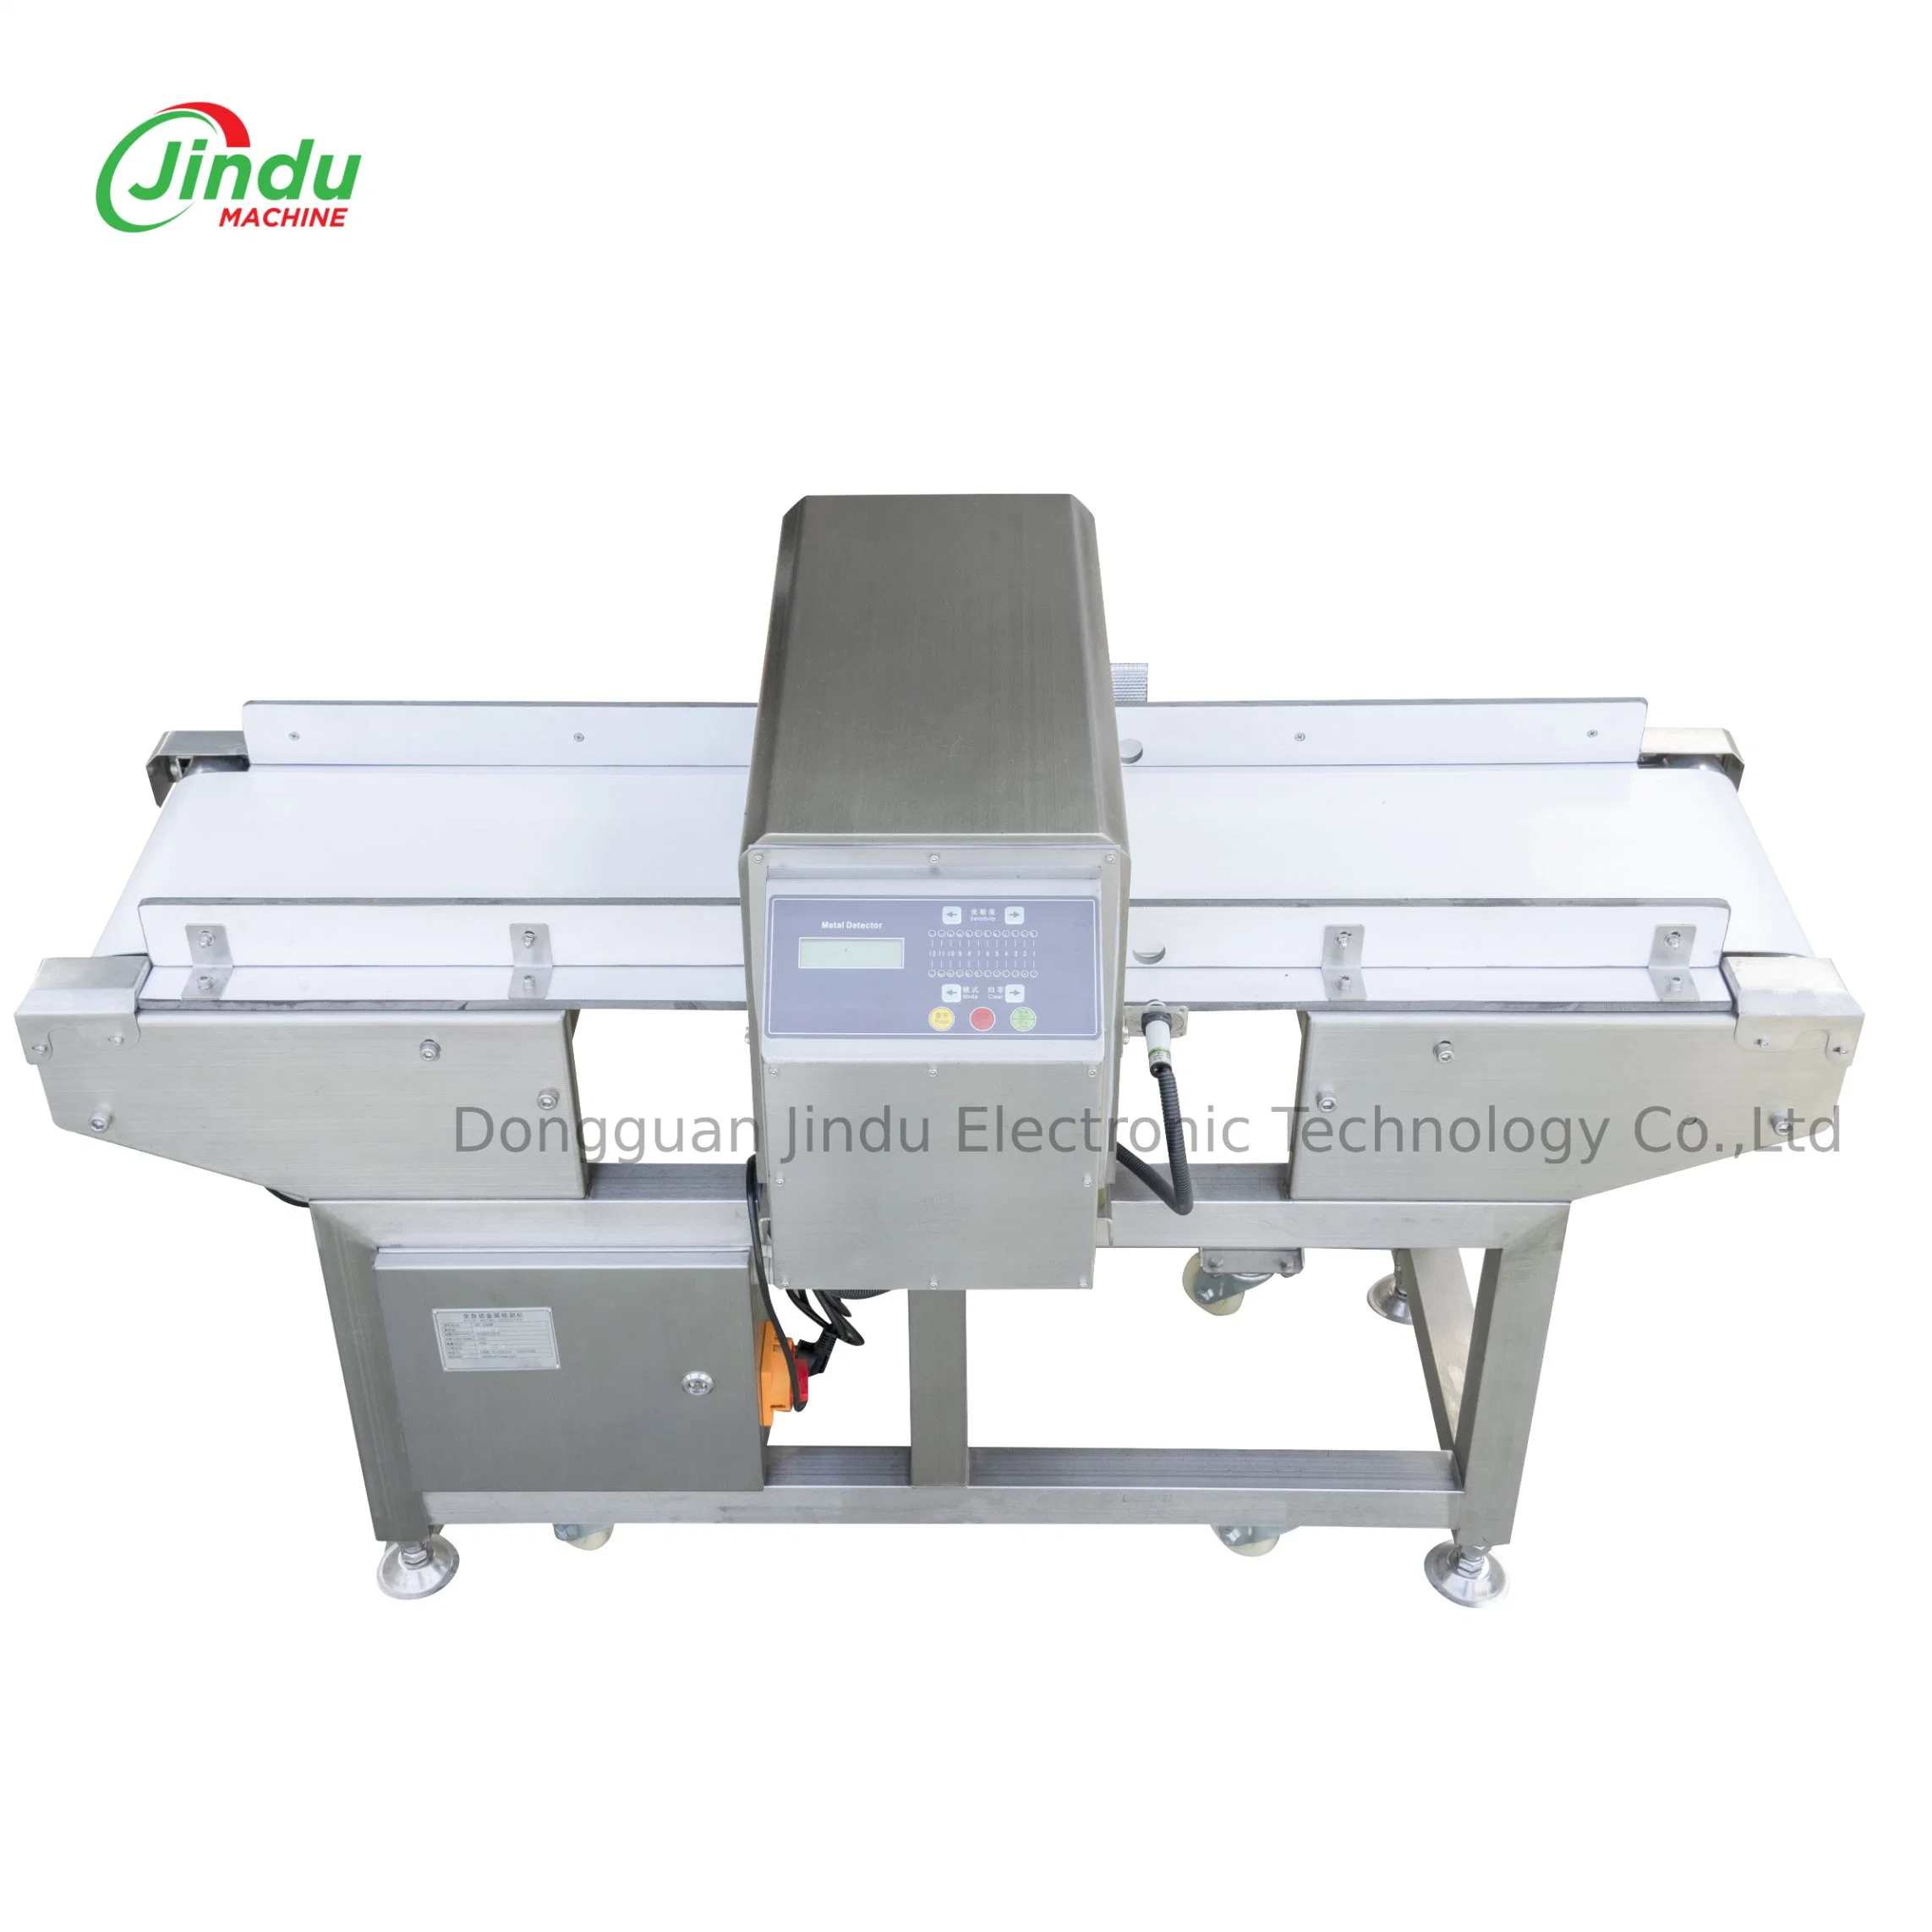 05 Jindu Machine for Automatic Belt Conveyor Food Metal Detector for Conveyors